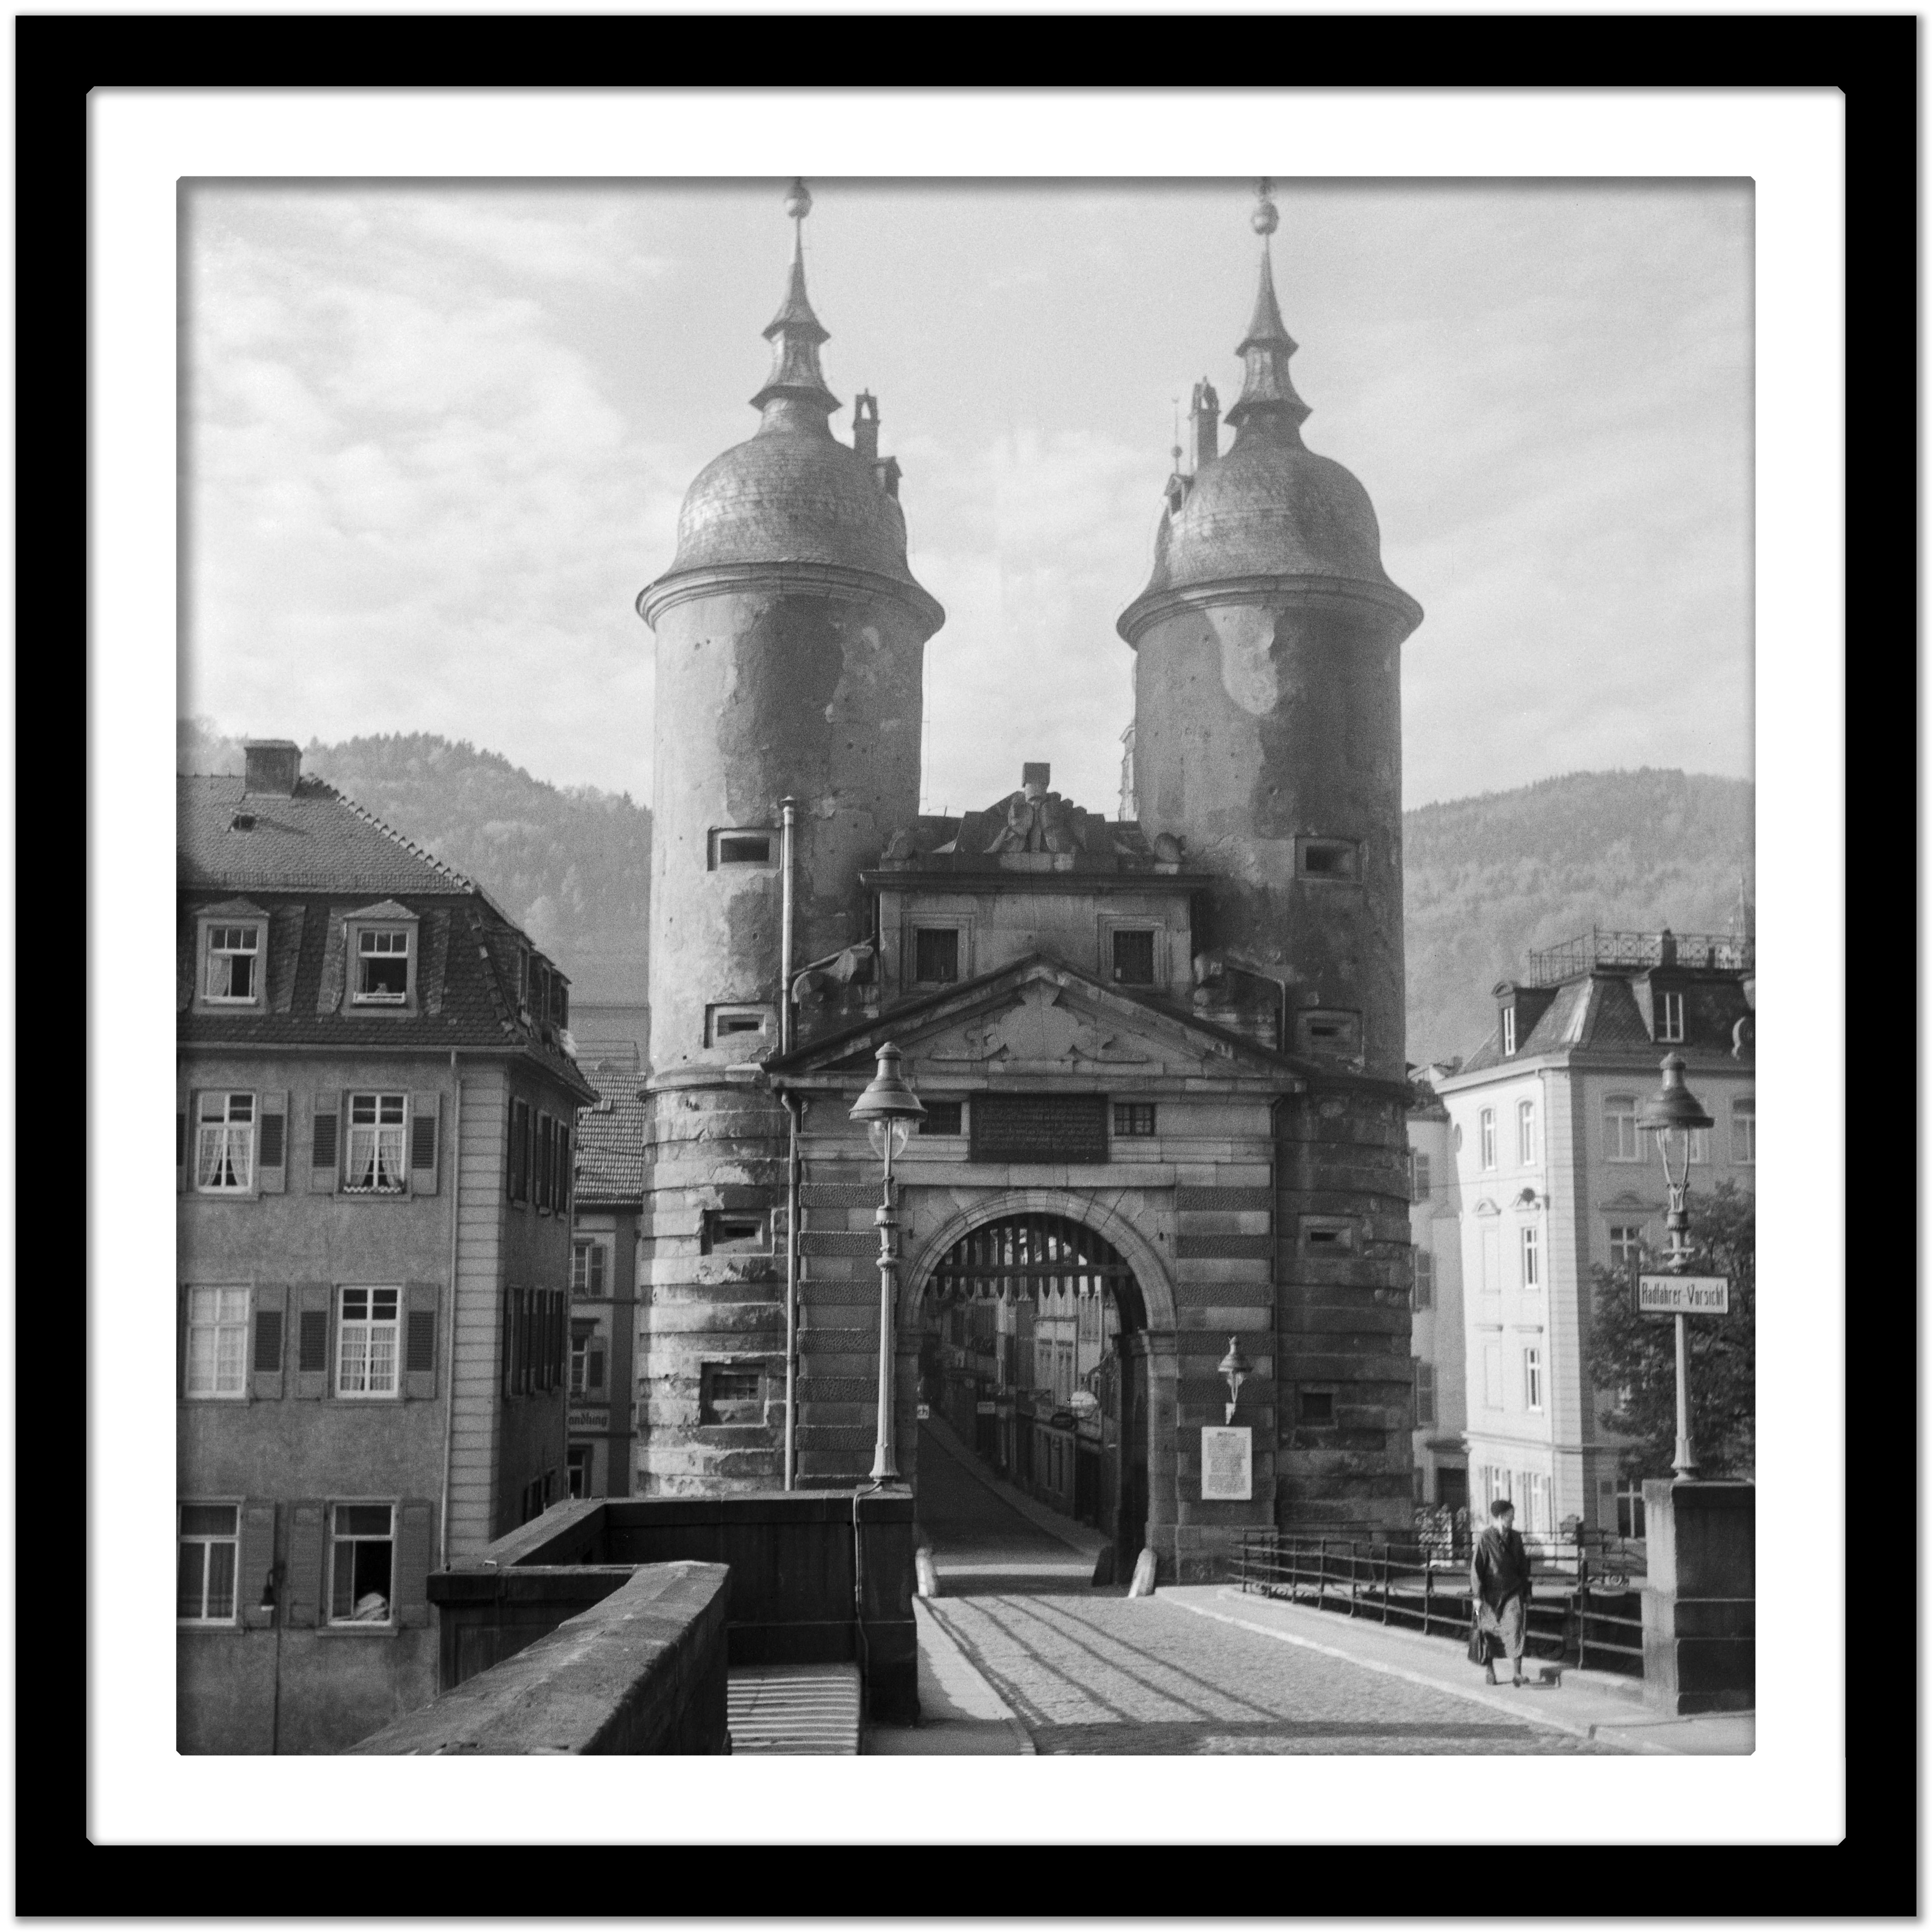 Brueckentor gate at old bridge Neckar Heidelberg, Germany 1936, Printed Later  - Gray Black and White Photograph by Karl Heinrich Lämmel